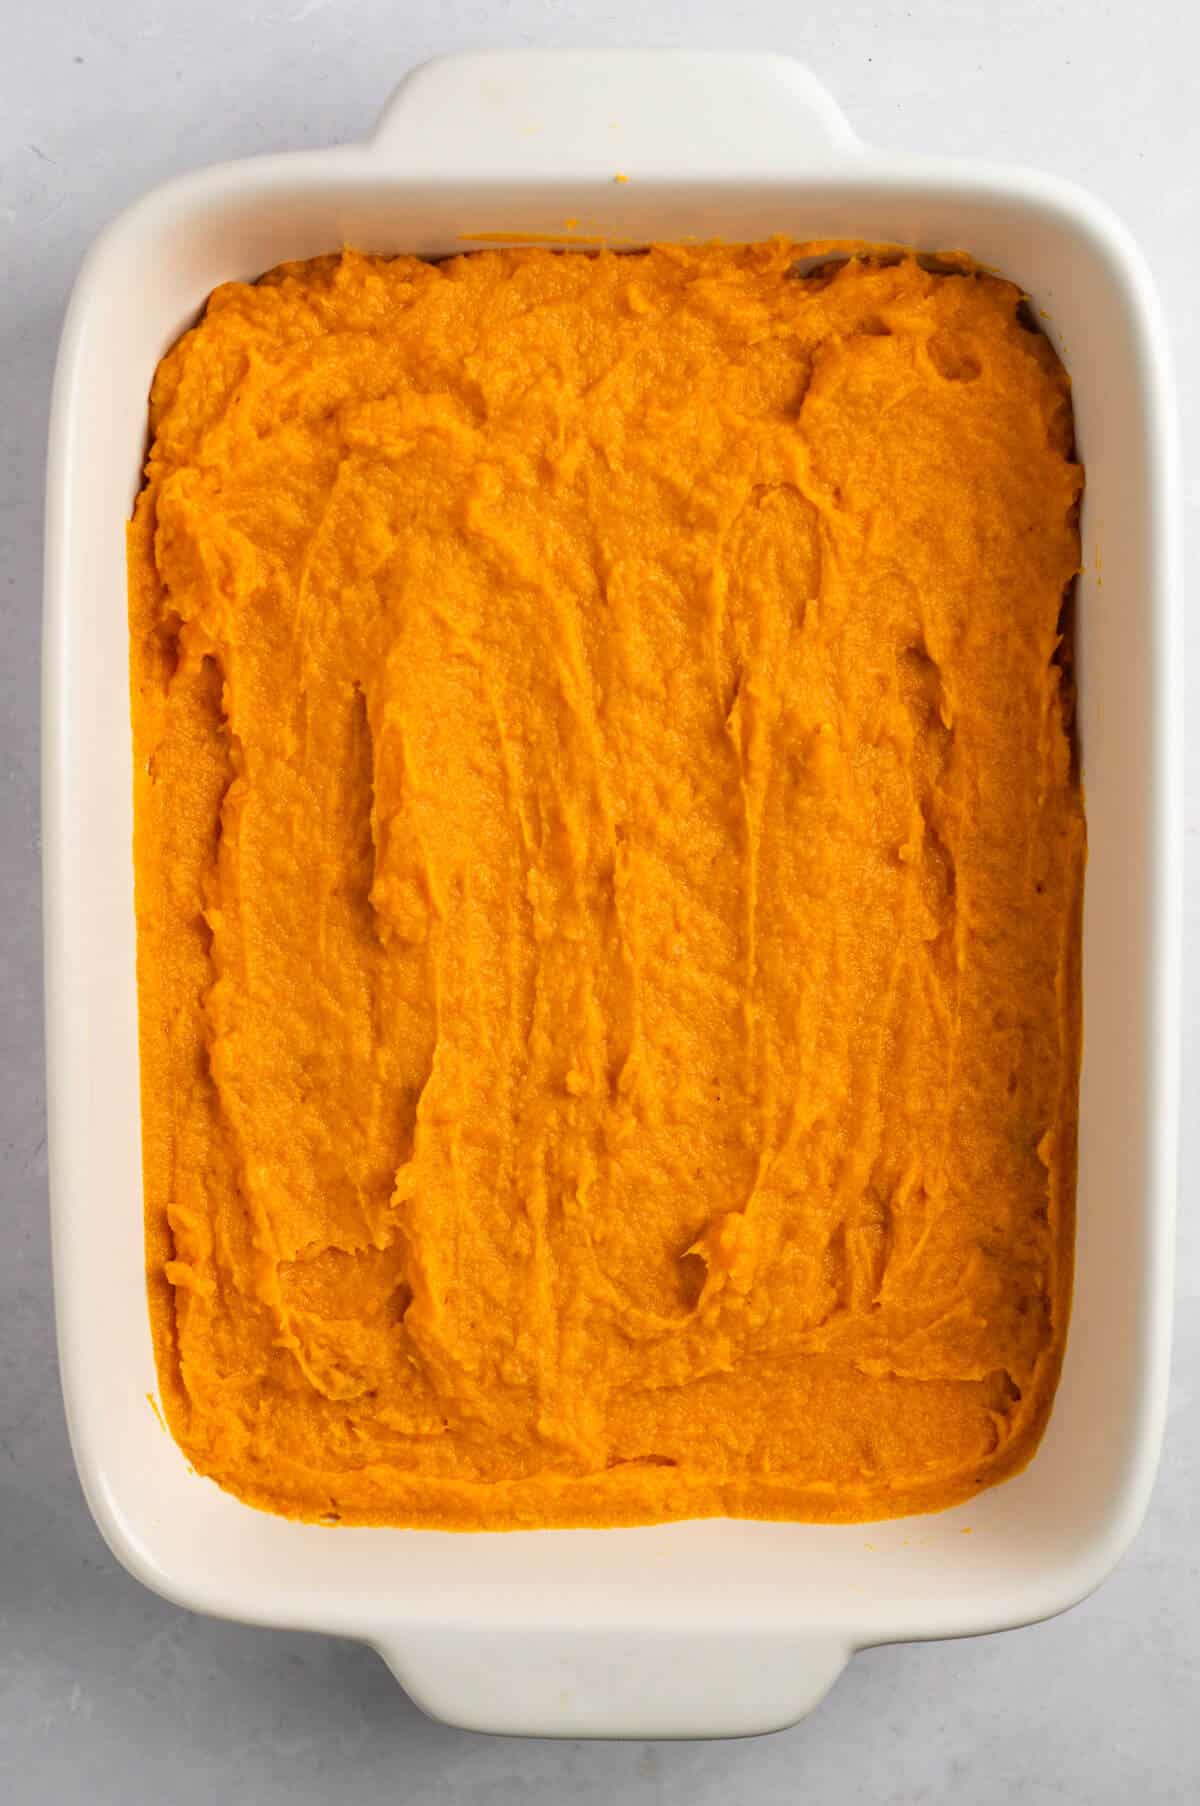 The sweet potato casserole mixture in a baking dish.